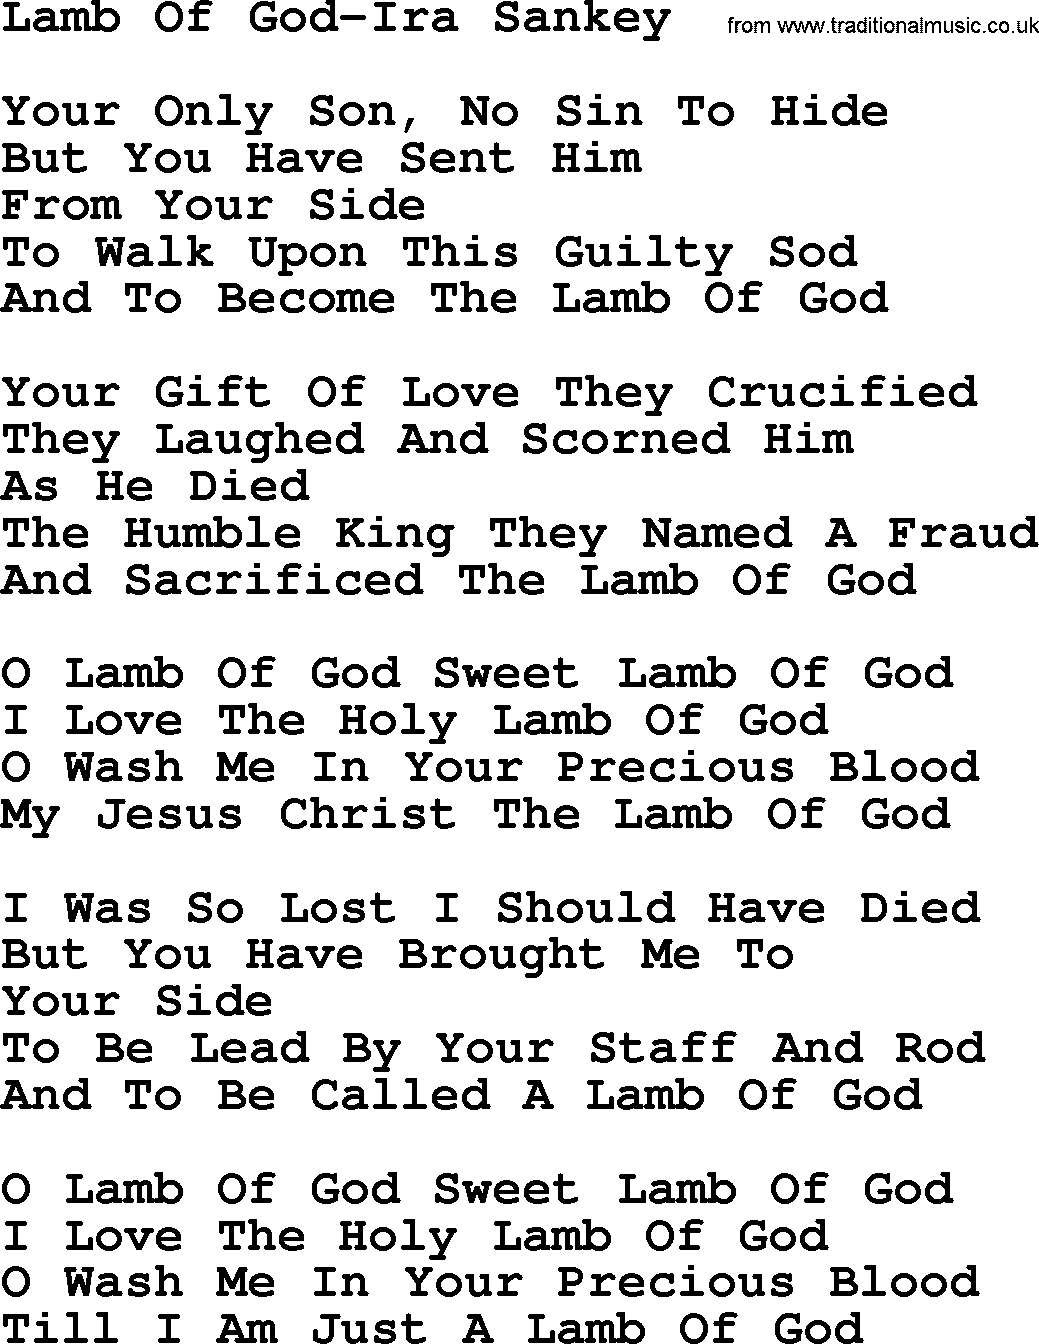 Ira Sankey hymn: Lamb Of God-Ira Sankey, lyrics